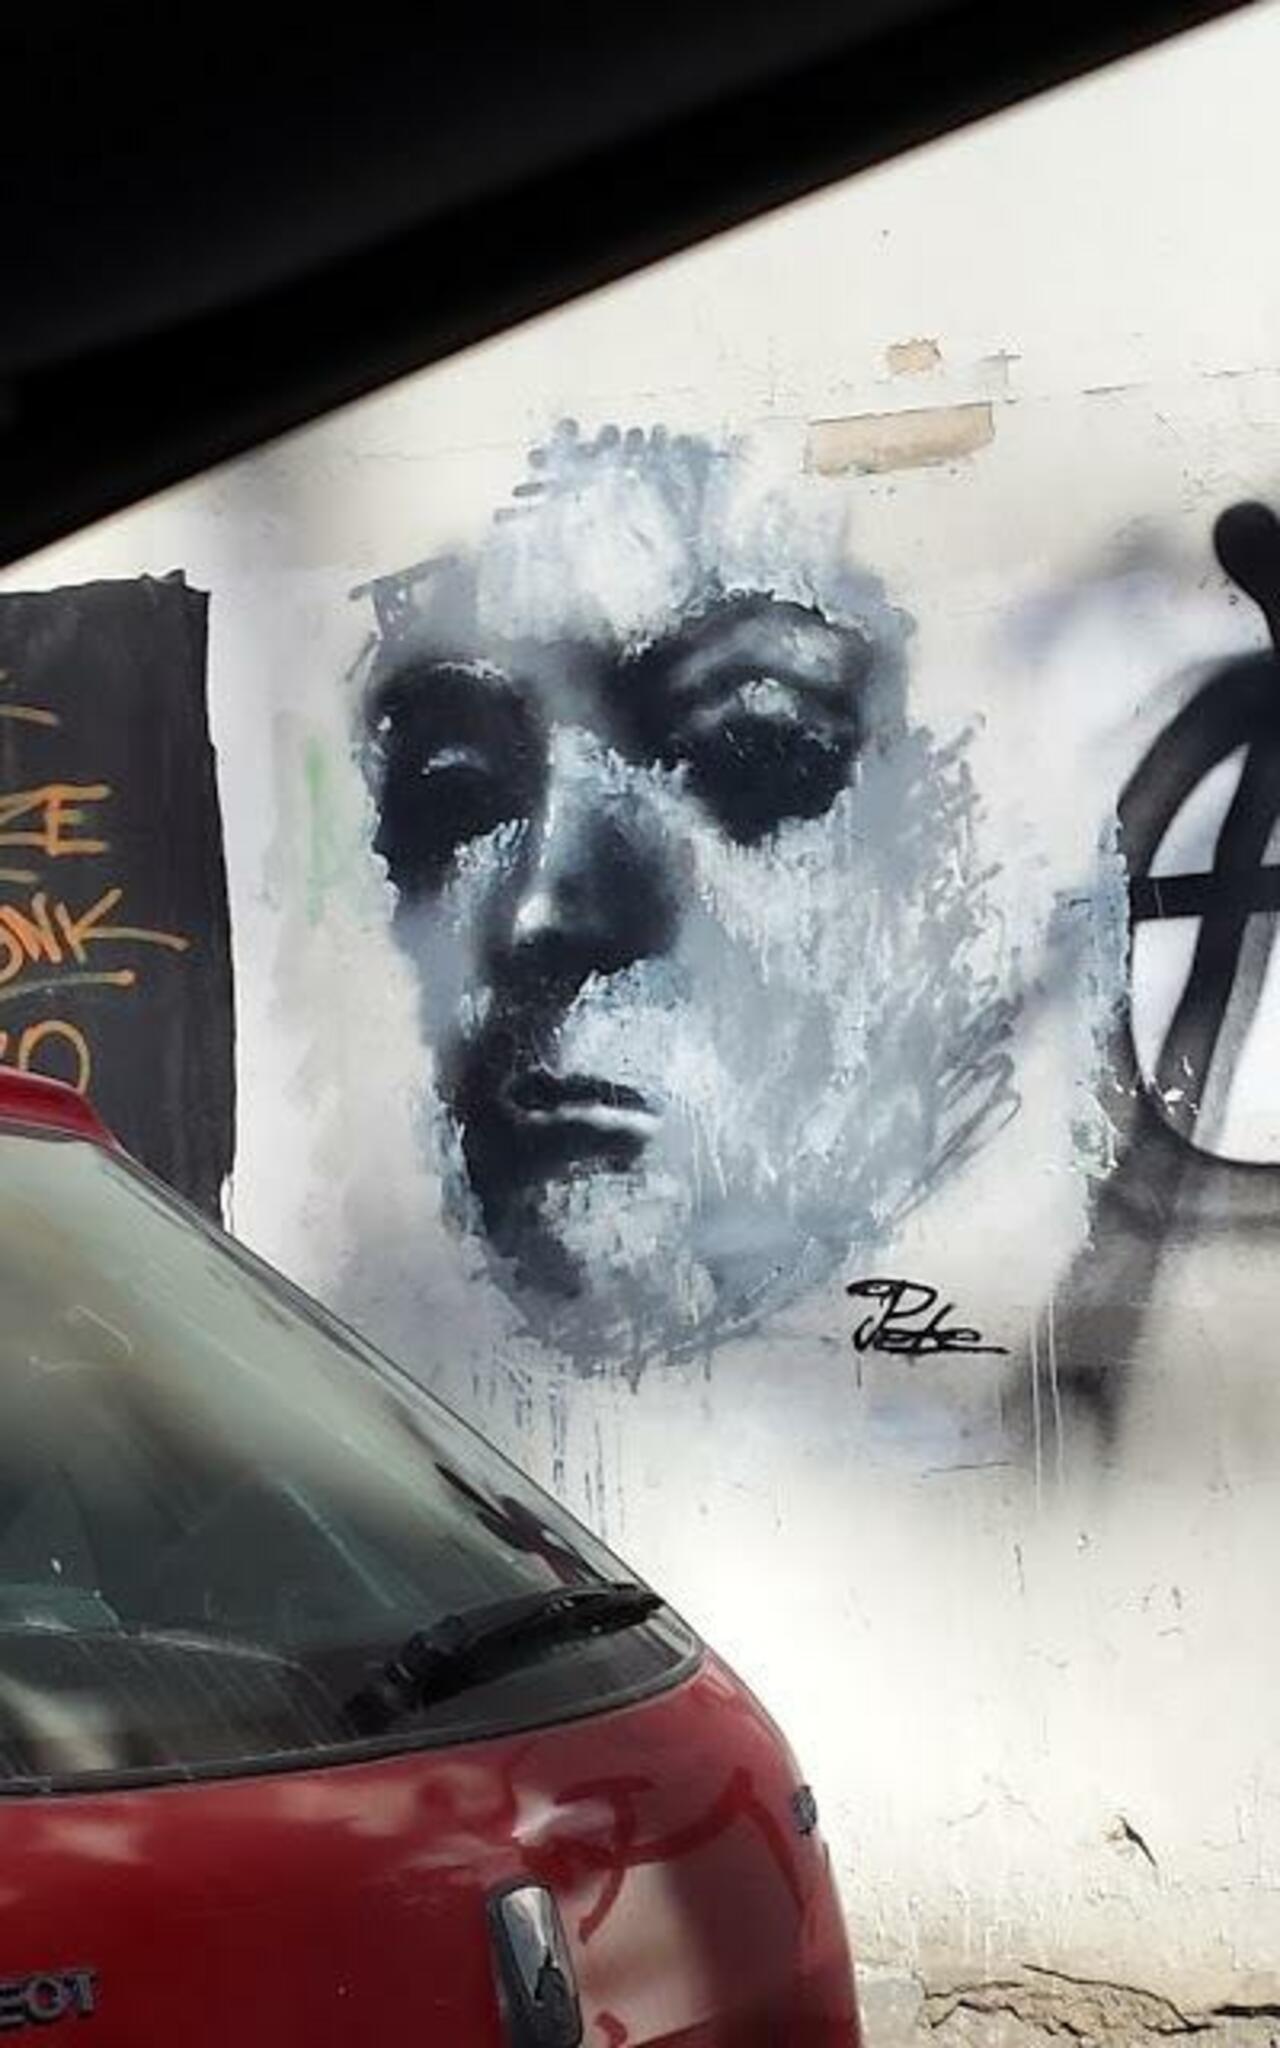 #Repost #art #StreetArt #graffiti #Athens

If you want to see more, visit my blog
http://streetartph0t0s.blogspot.gr/

 https://t.co/bpE3AVJfrZ